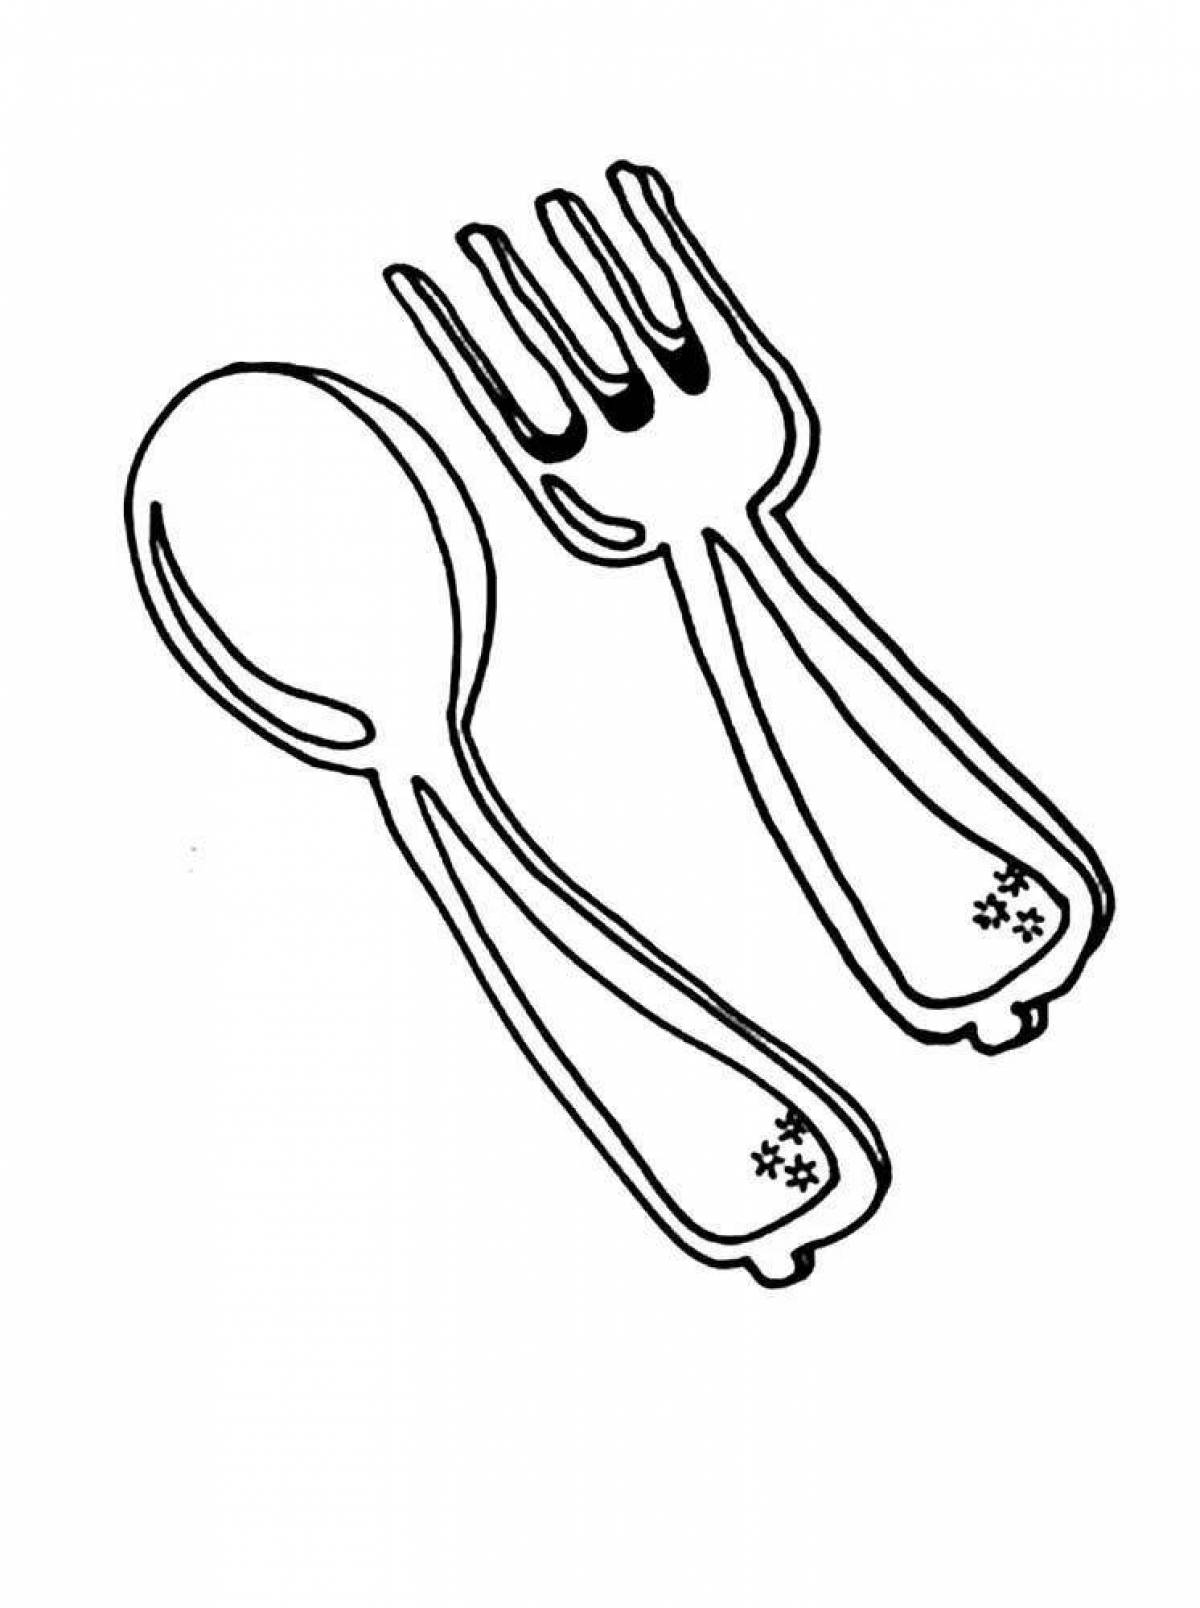 Humorous cutlery coloring